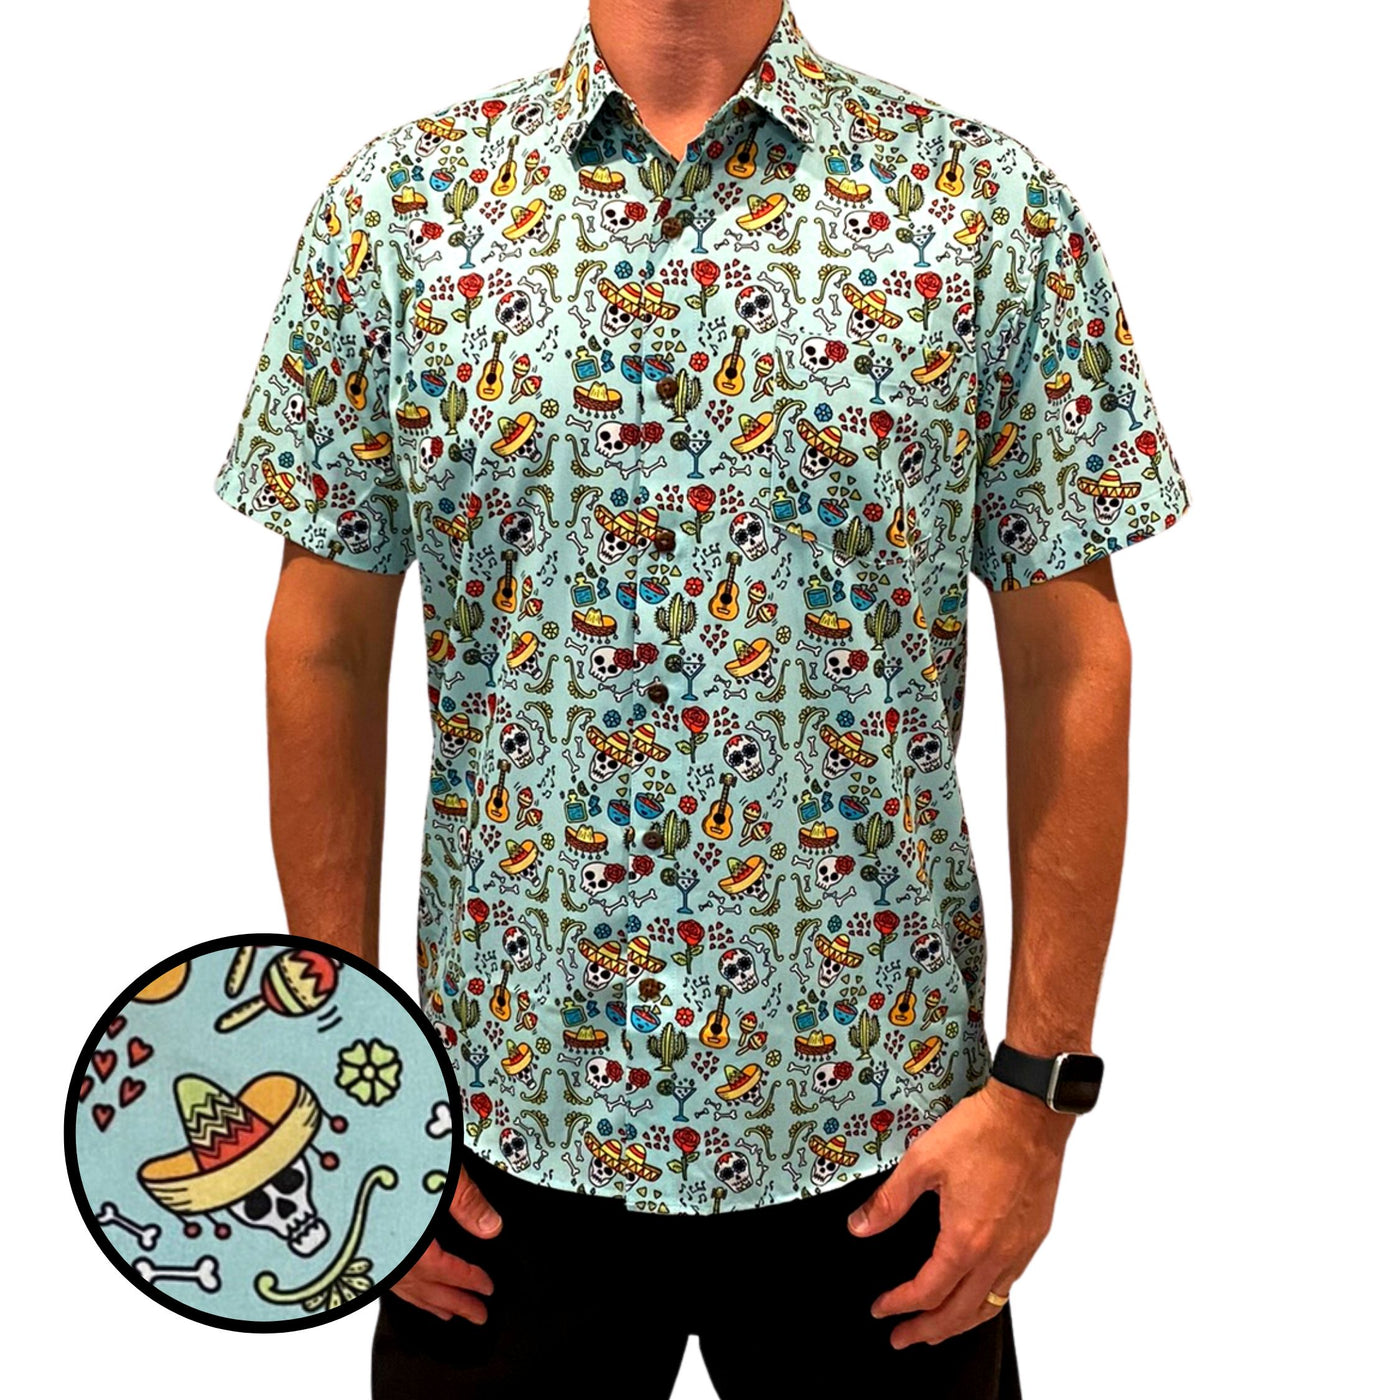 Super Stretch - Mexican Fiesta Hawaiian Shirt